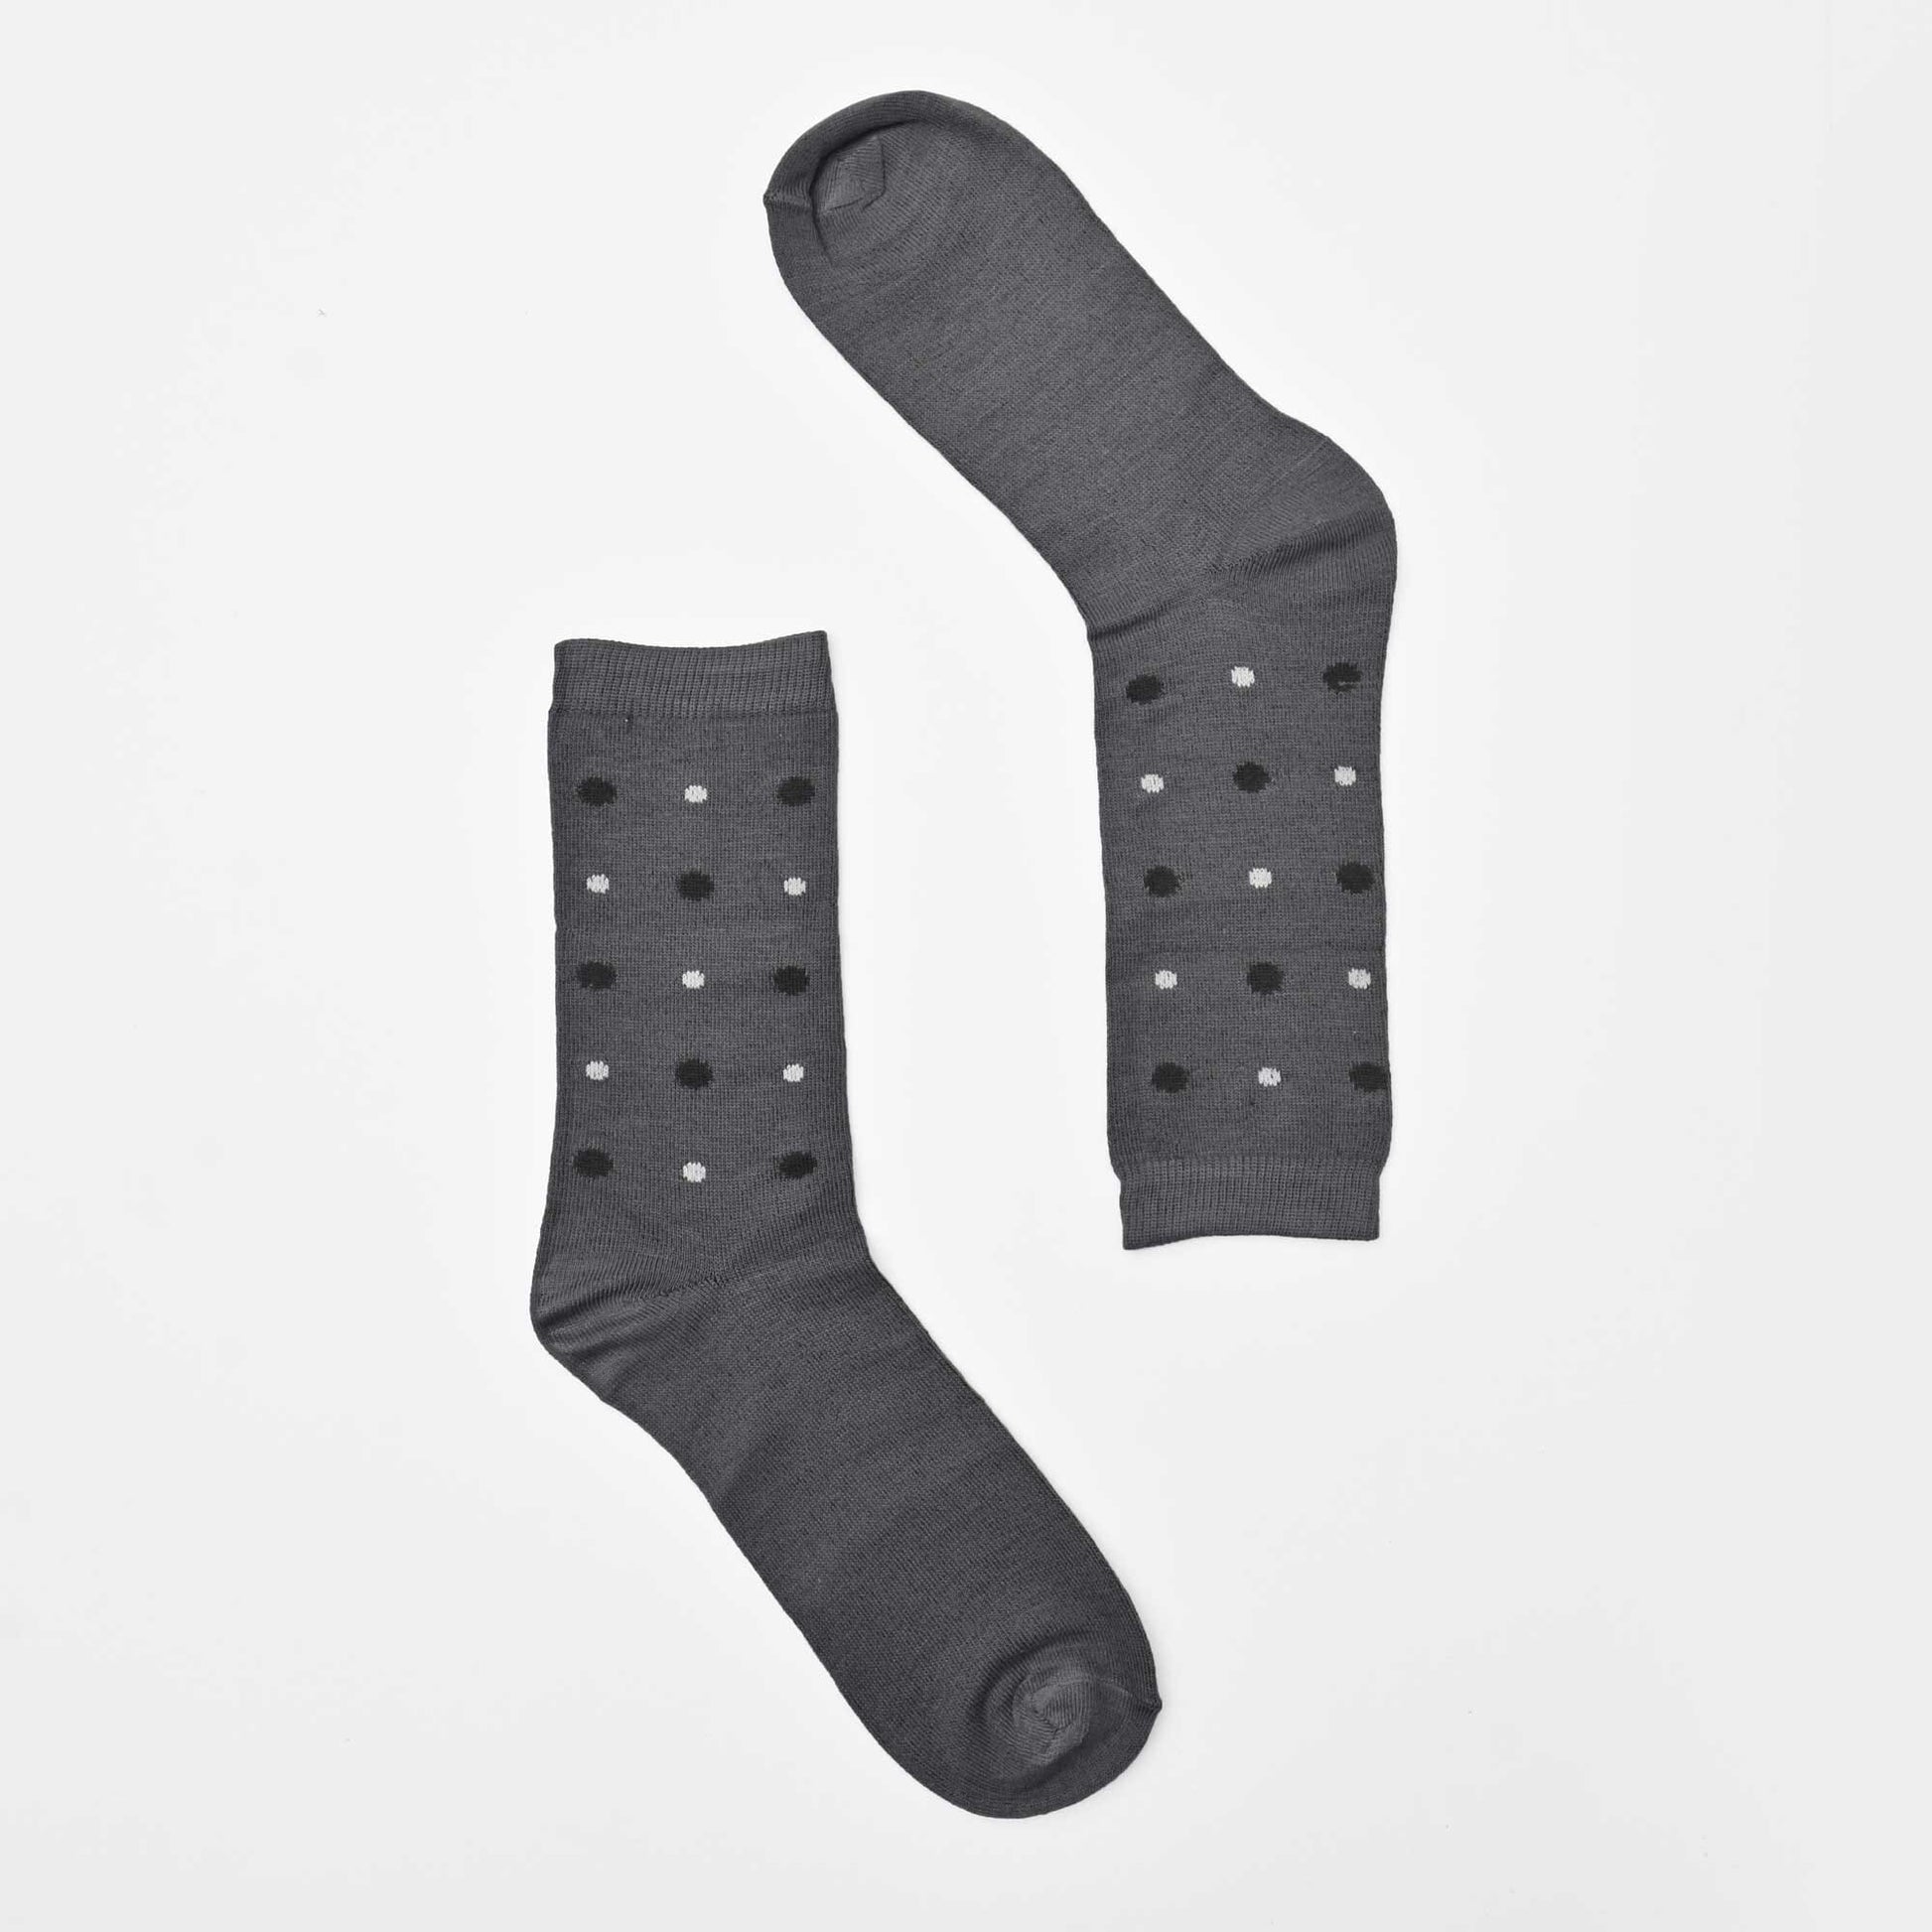 KLV Men's Algadon Classic Crew Socks Socks RAM Graphite D6 EUR 40-46